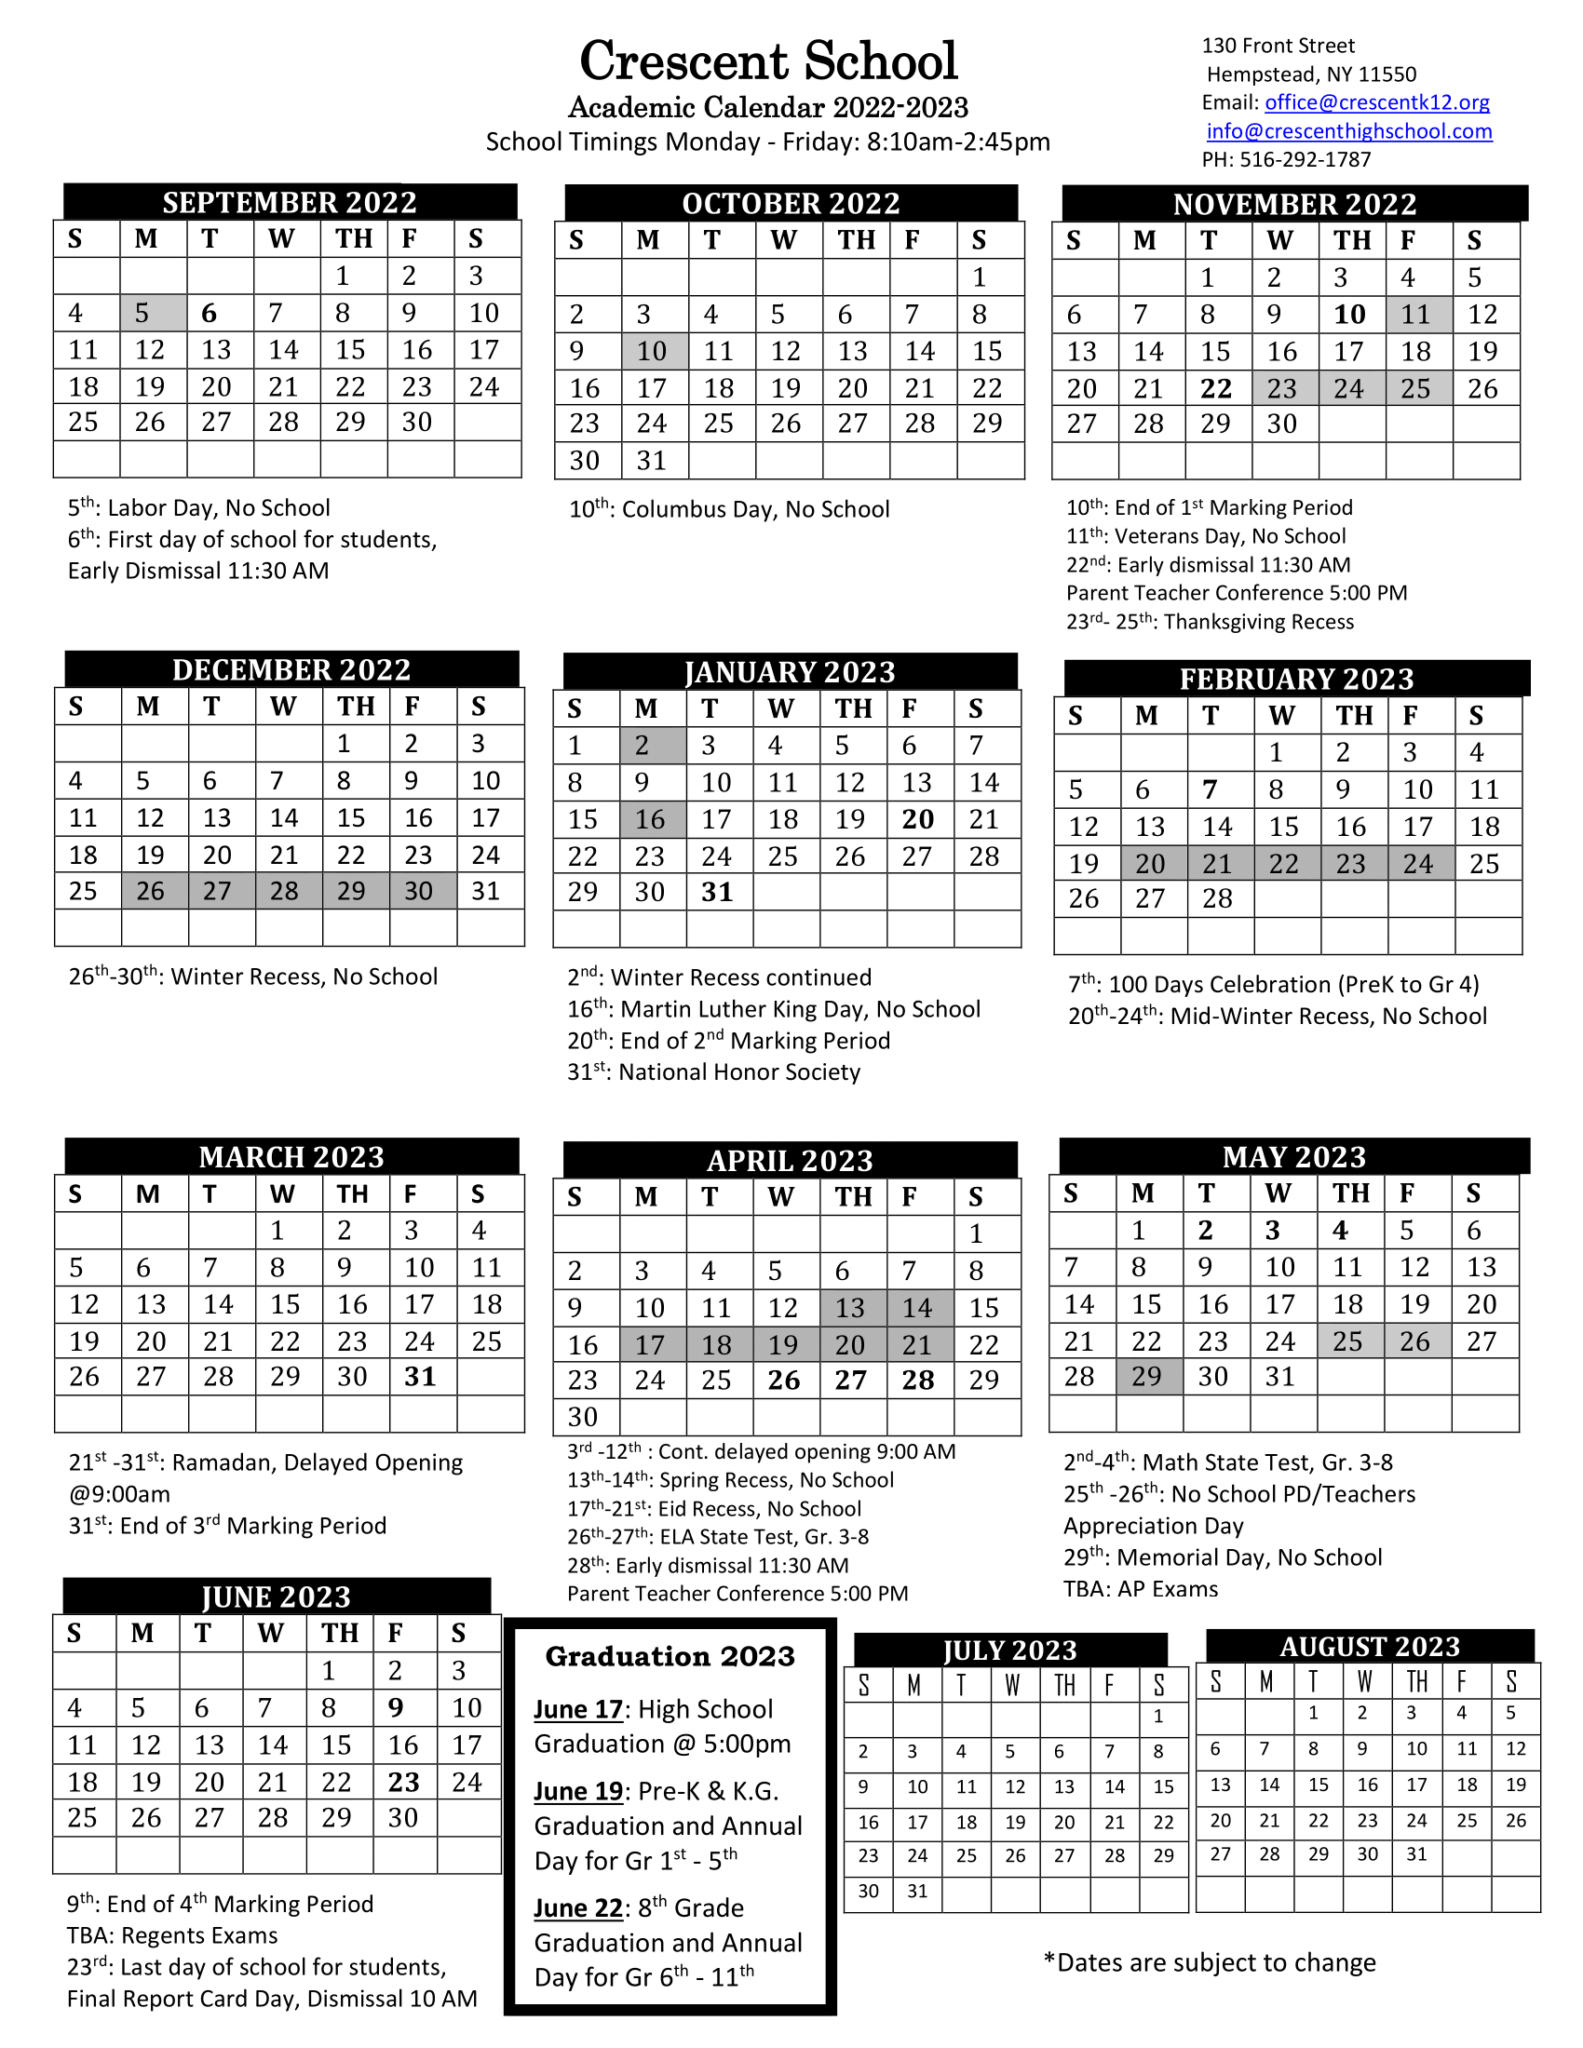 Academic Calendar Crescent School